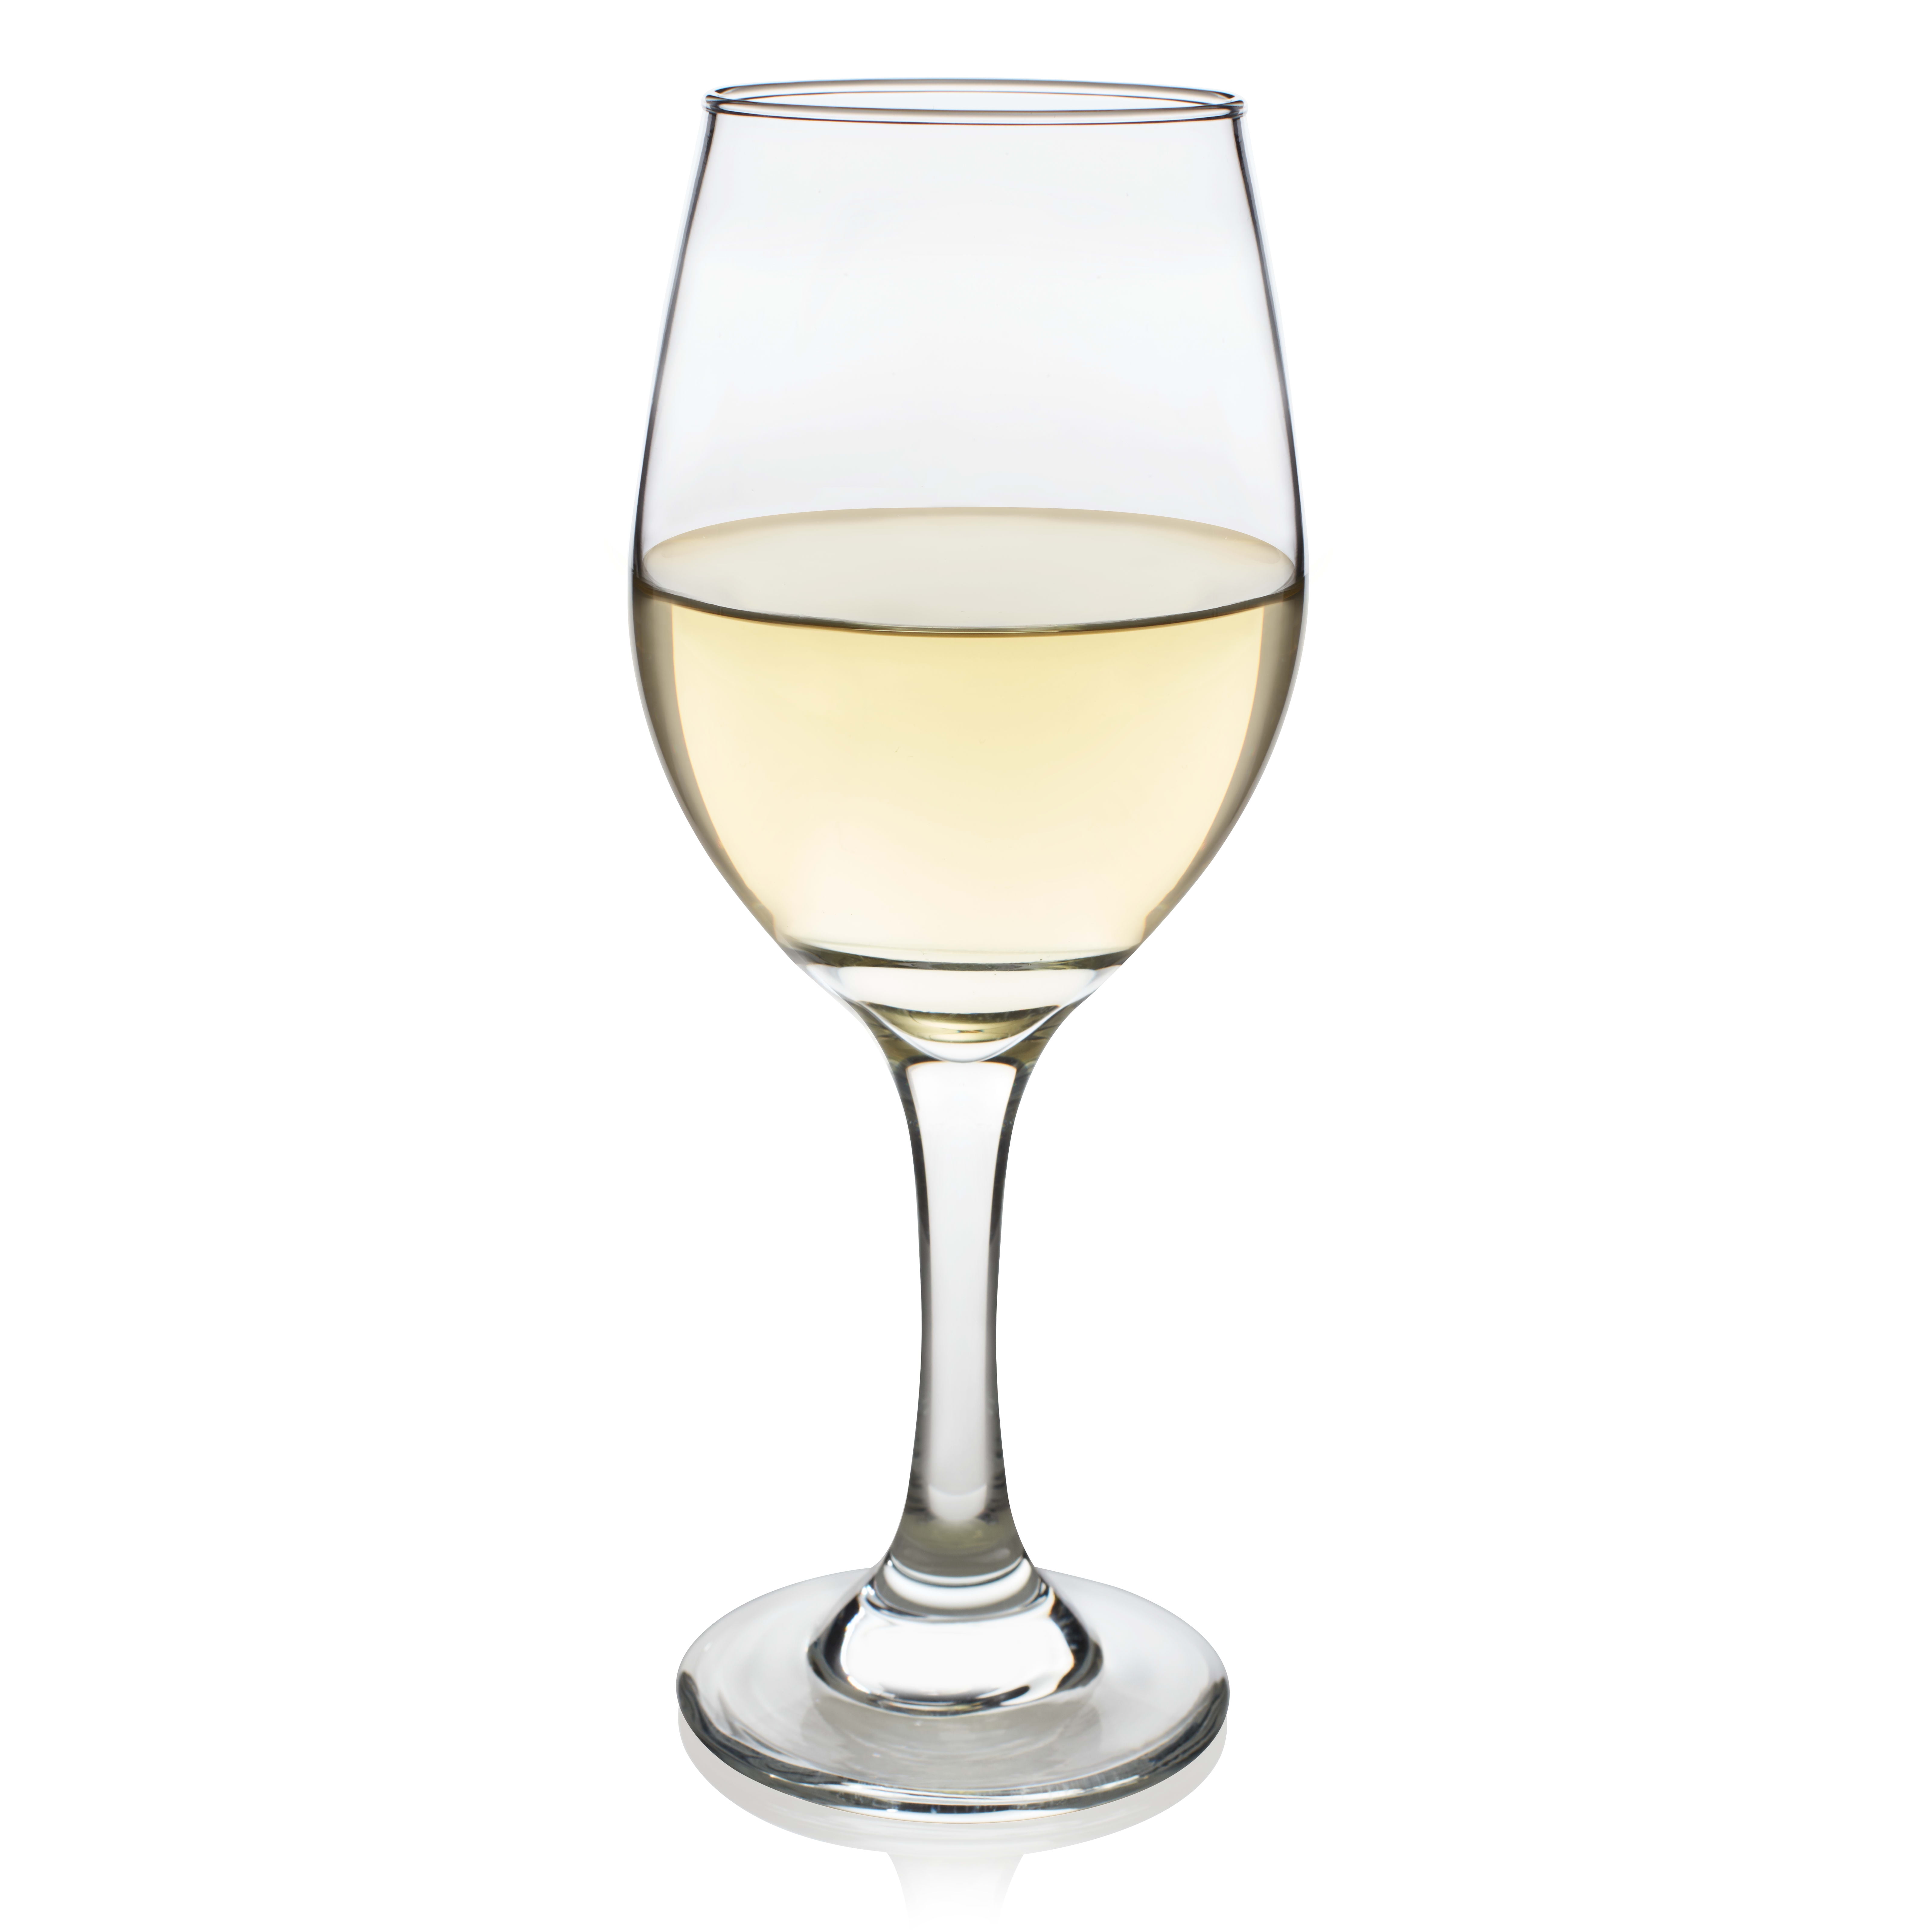 Libbey Basics White Wine Glasses, 11-ounce, Set of 4 - Walmart.com